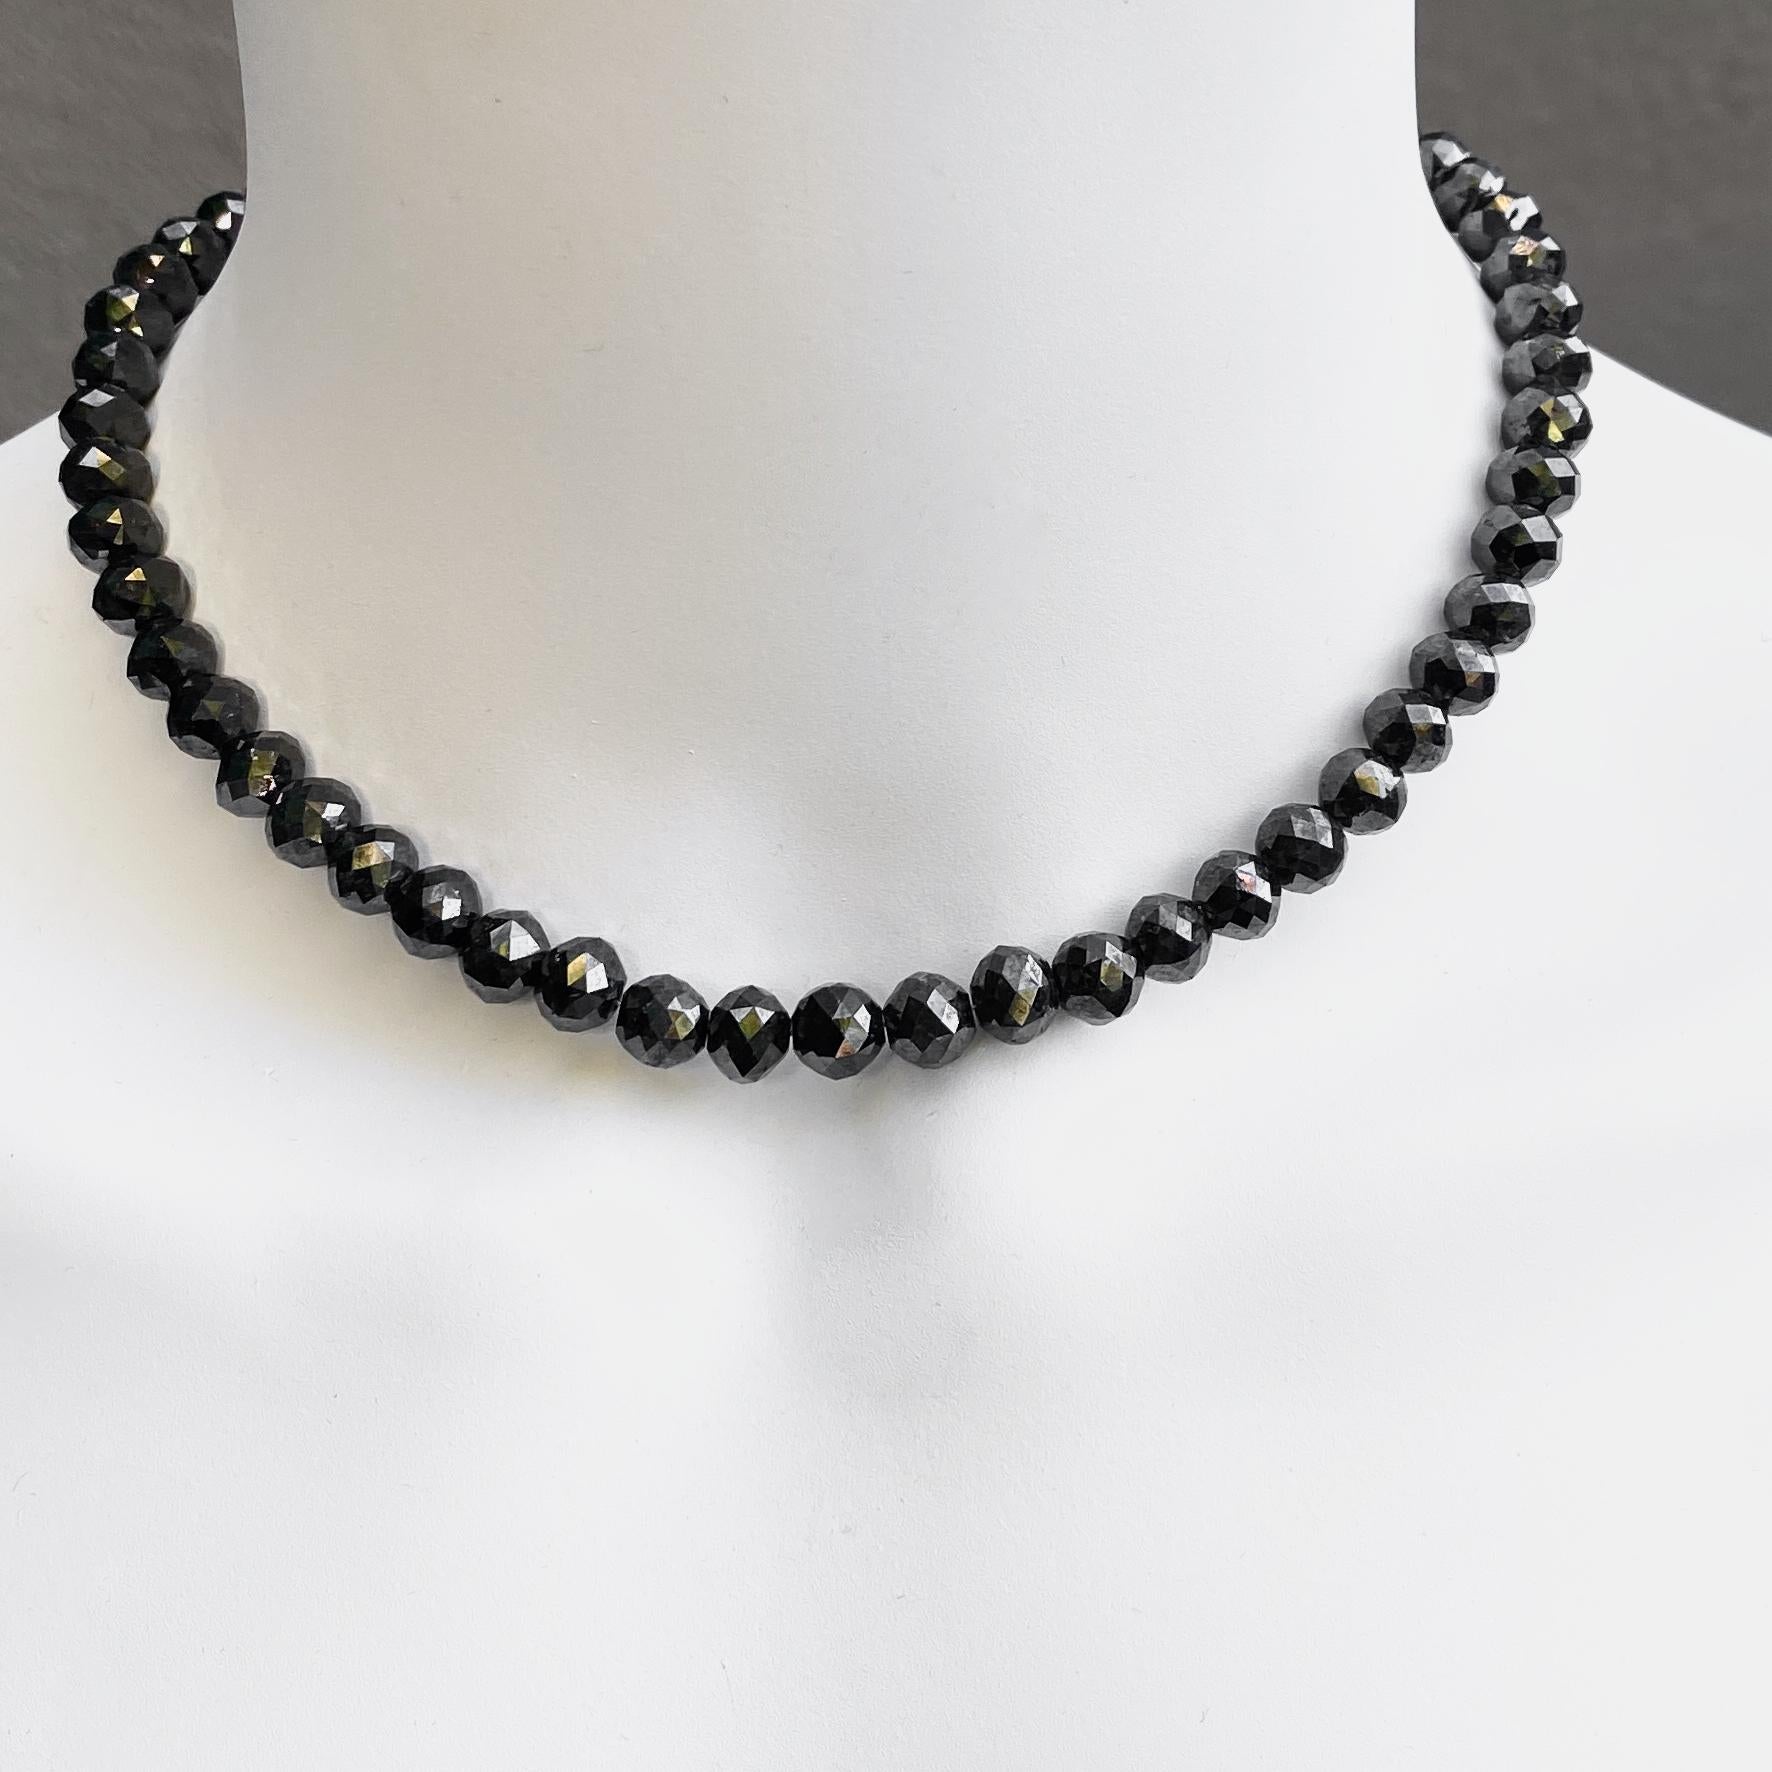 Women's or Men's 250 Carat Black Diamond Bead Choker Necklace with Garnet Clasp in 18 Karat Gold For Sale